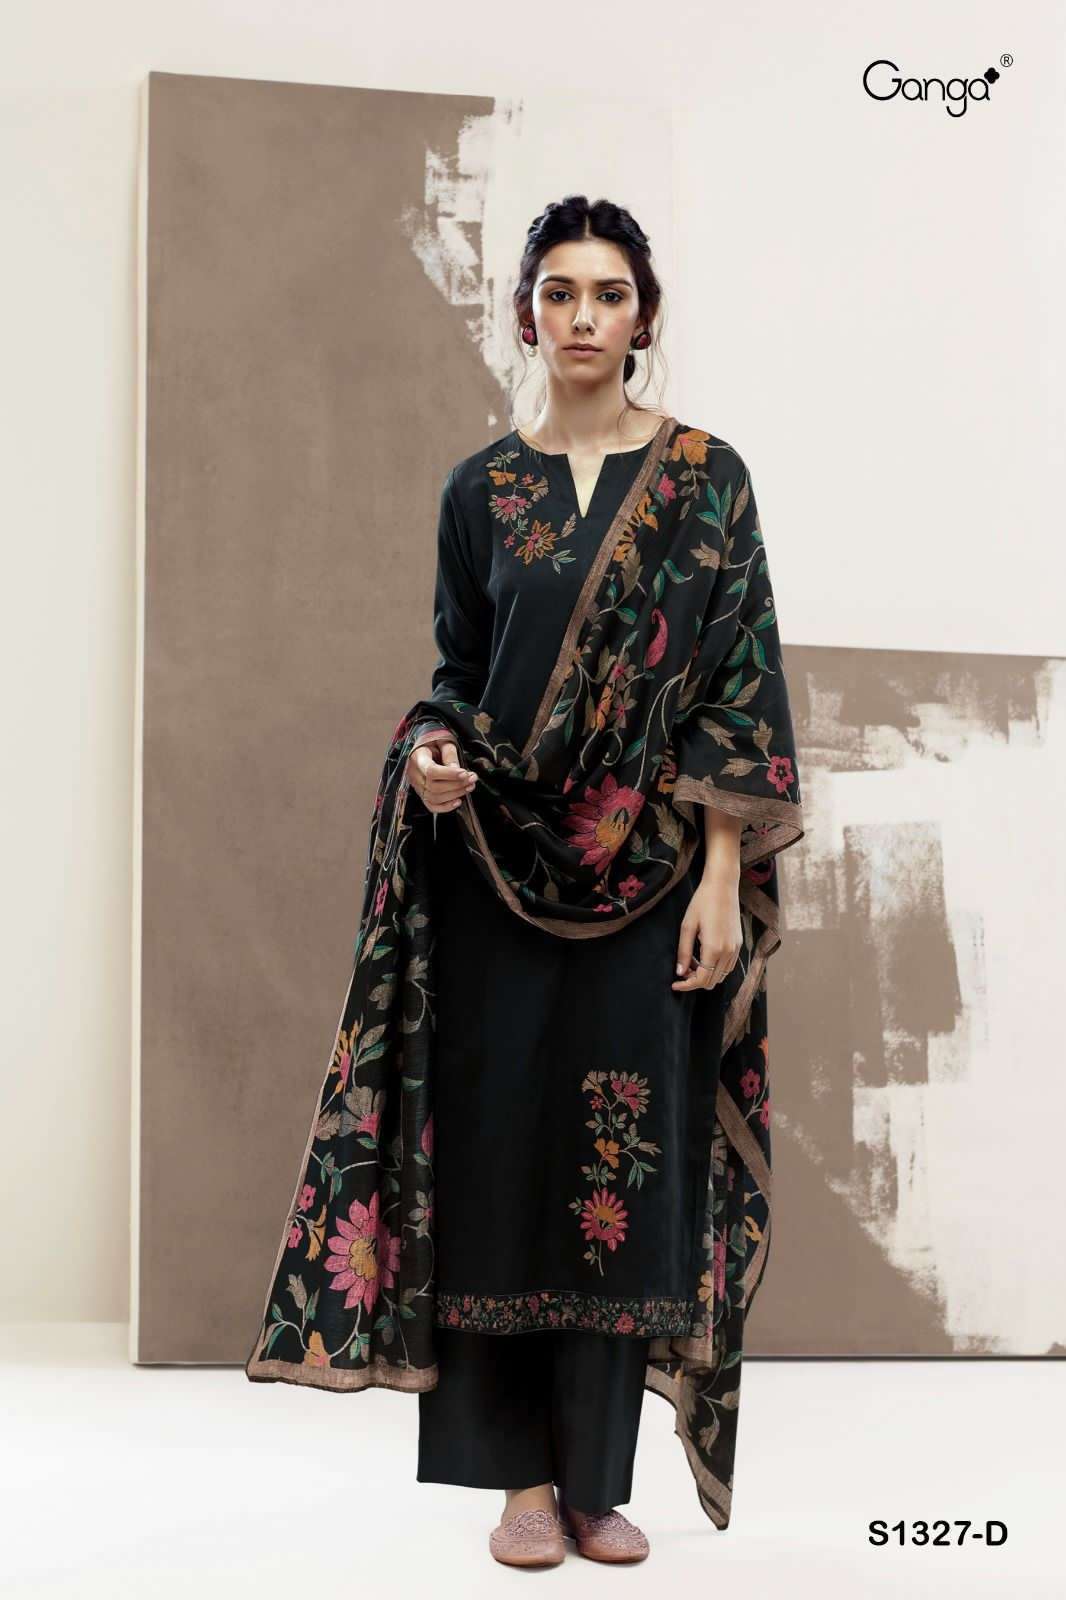 ganga ishana 1327 series exclusive designer salwar kameez catalogue wholesale price surat 